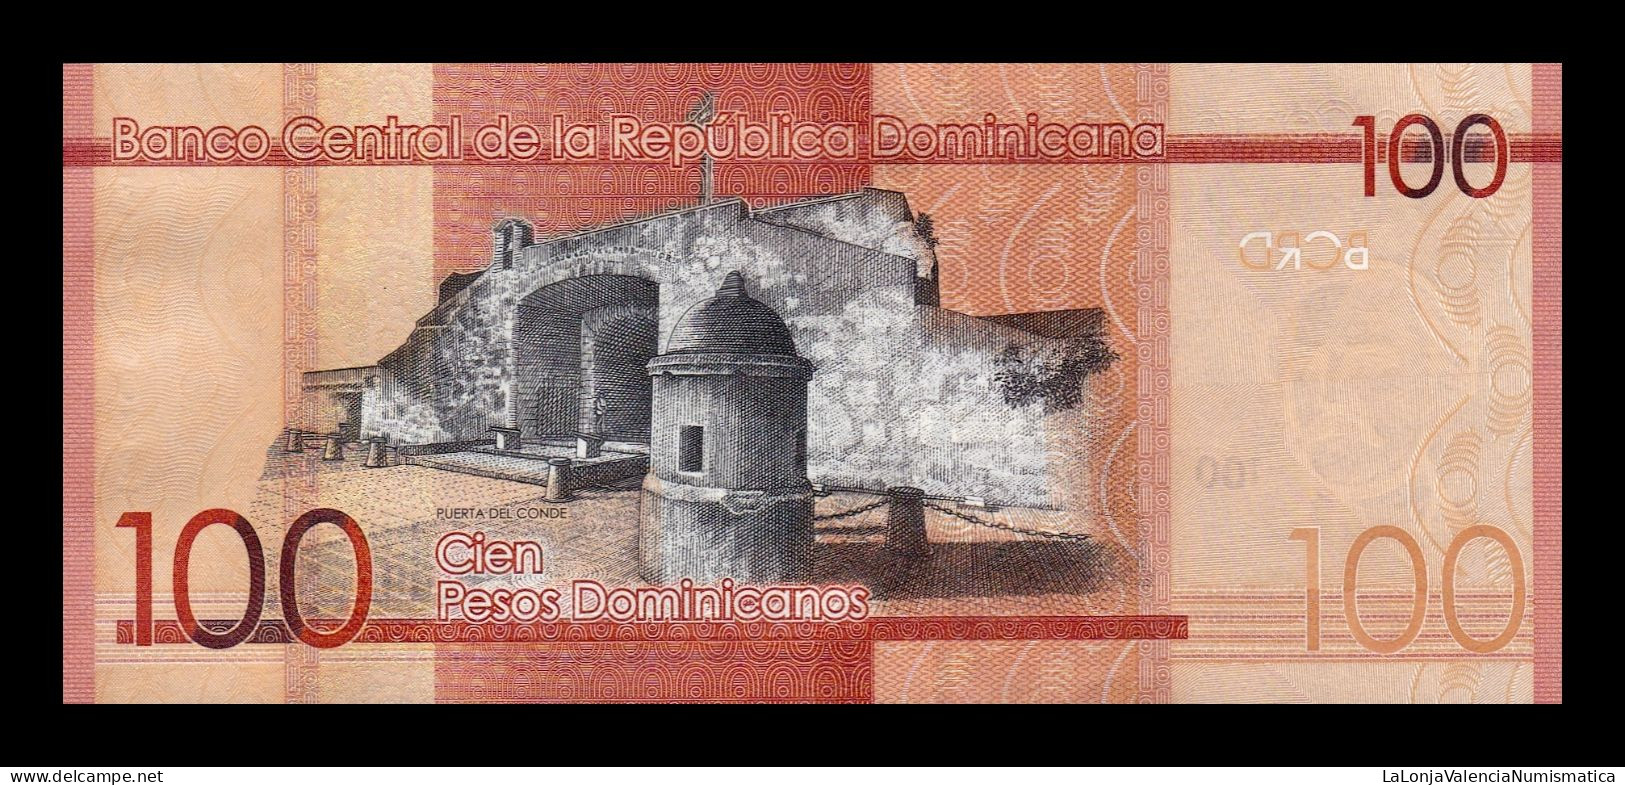 República Dominicana 100 Pesos Dominicanos 2016 Pick 190c Low Serial 993 Sc Unc - República Dominicana